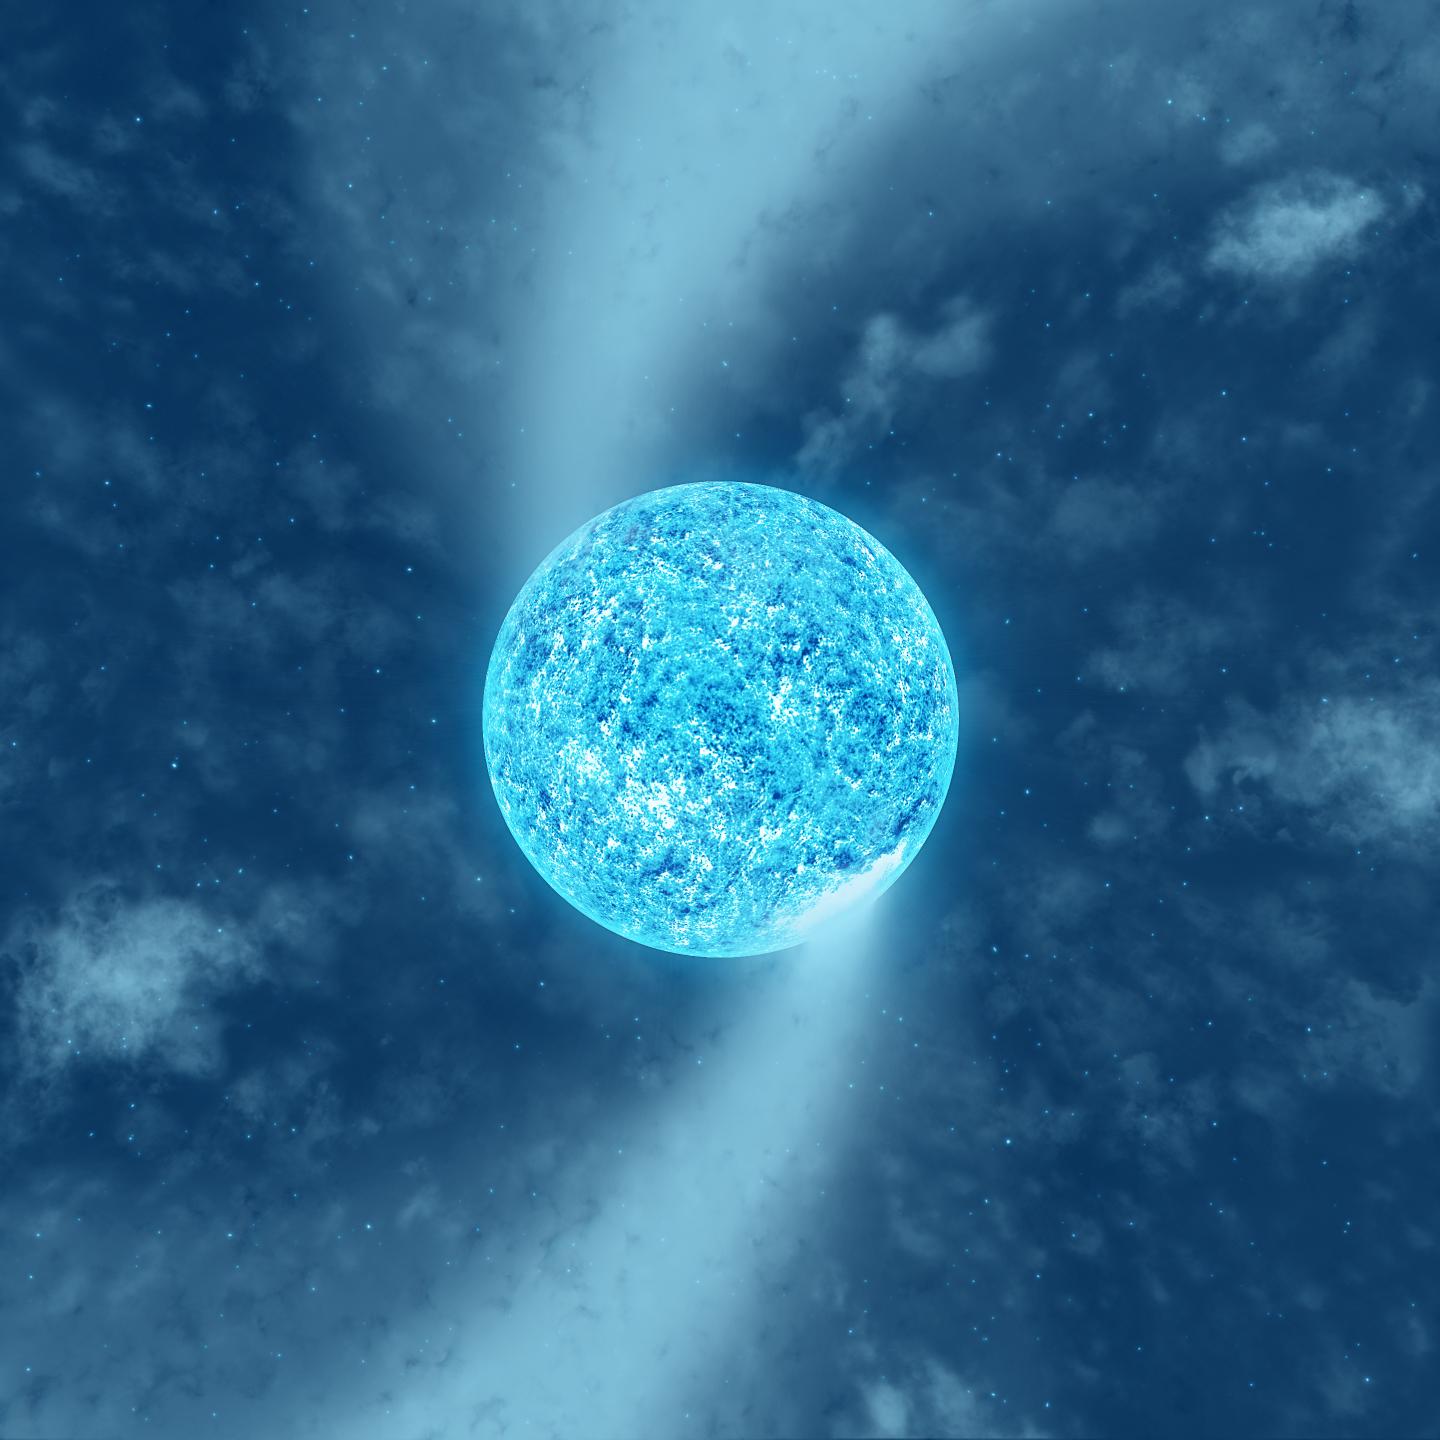 Artist's Impression of the Hot Massive Supergiant Zeta Puppis